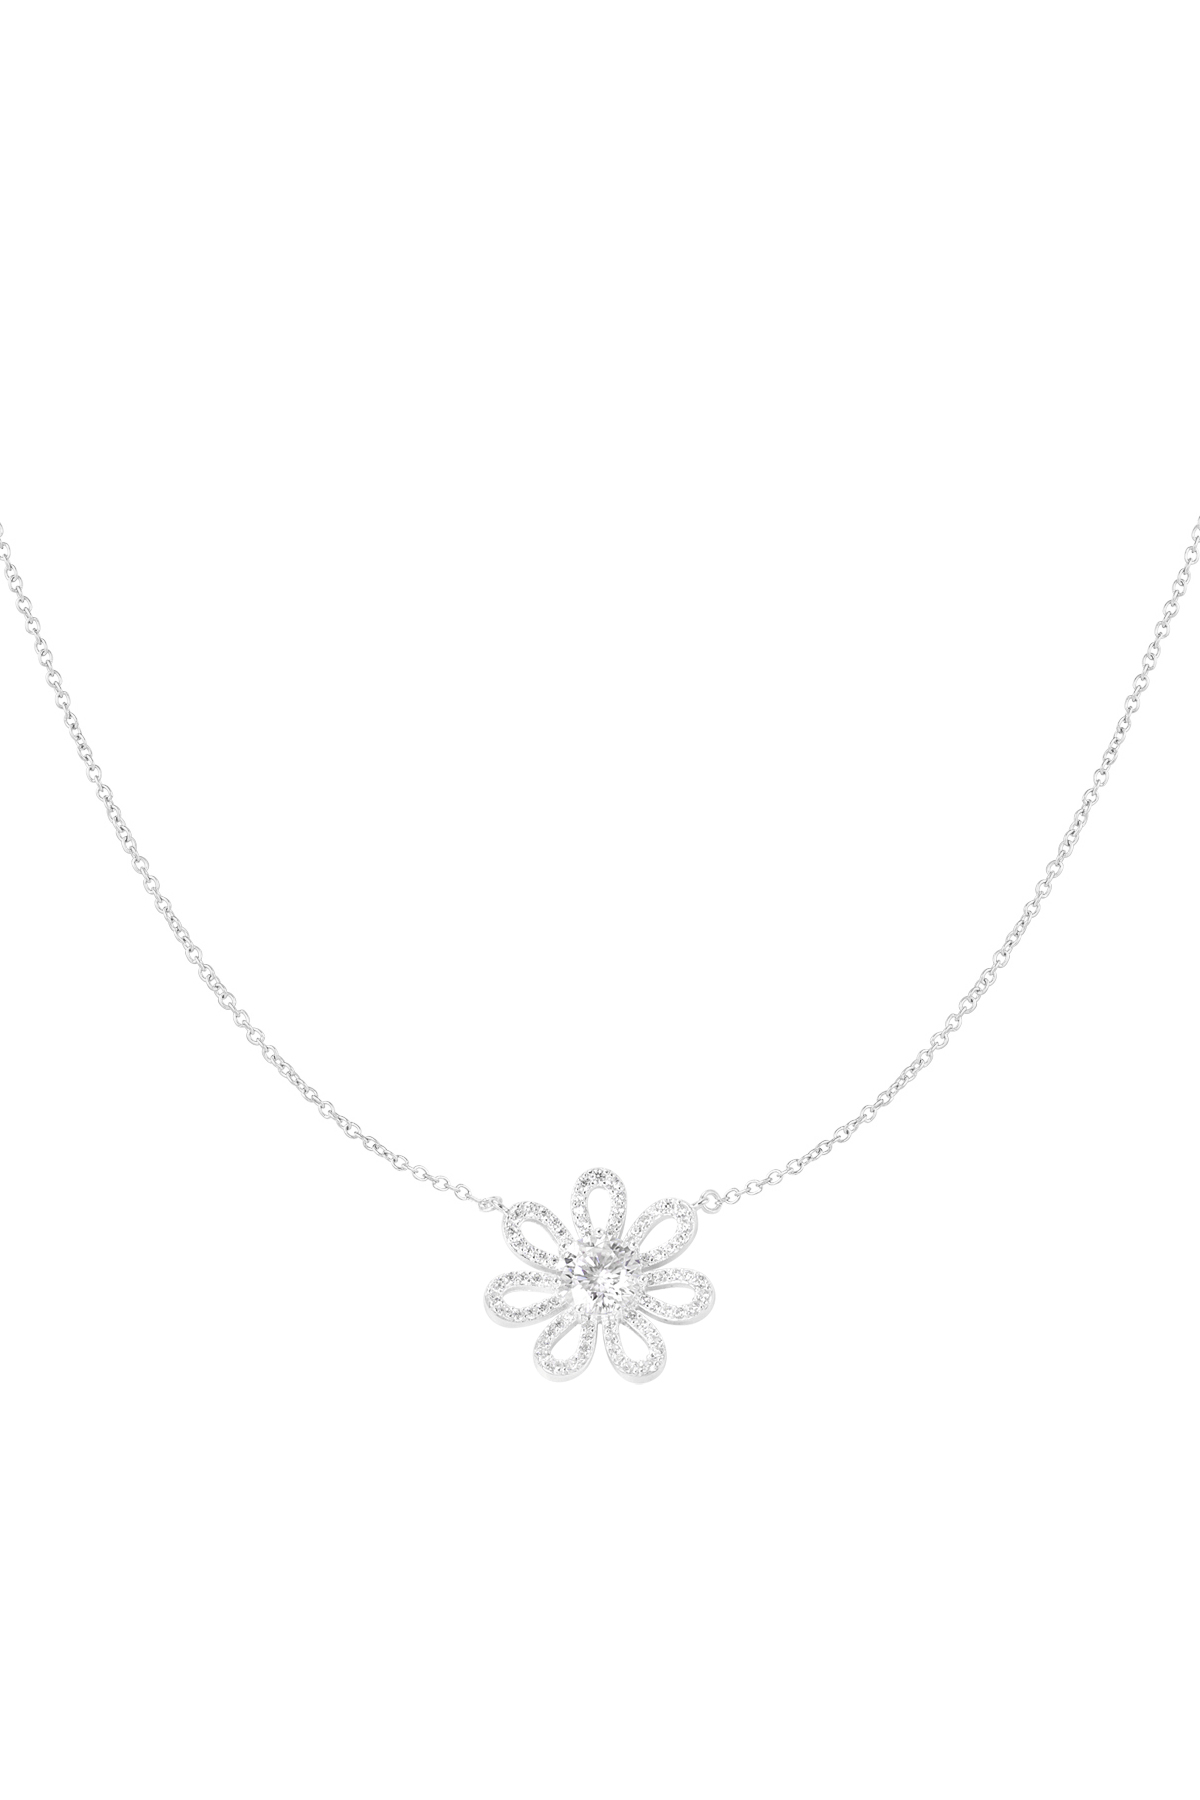 Necklace rhinestones flower - silver 